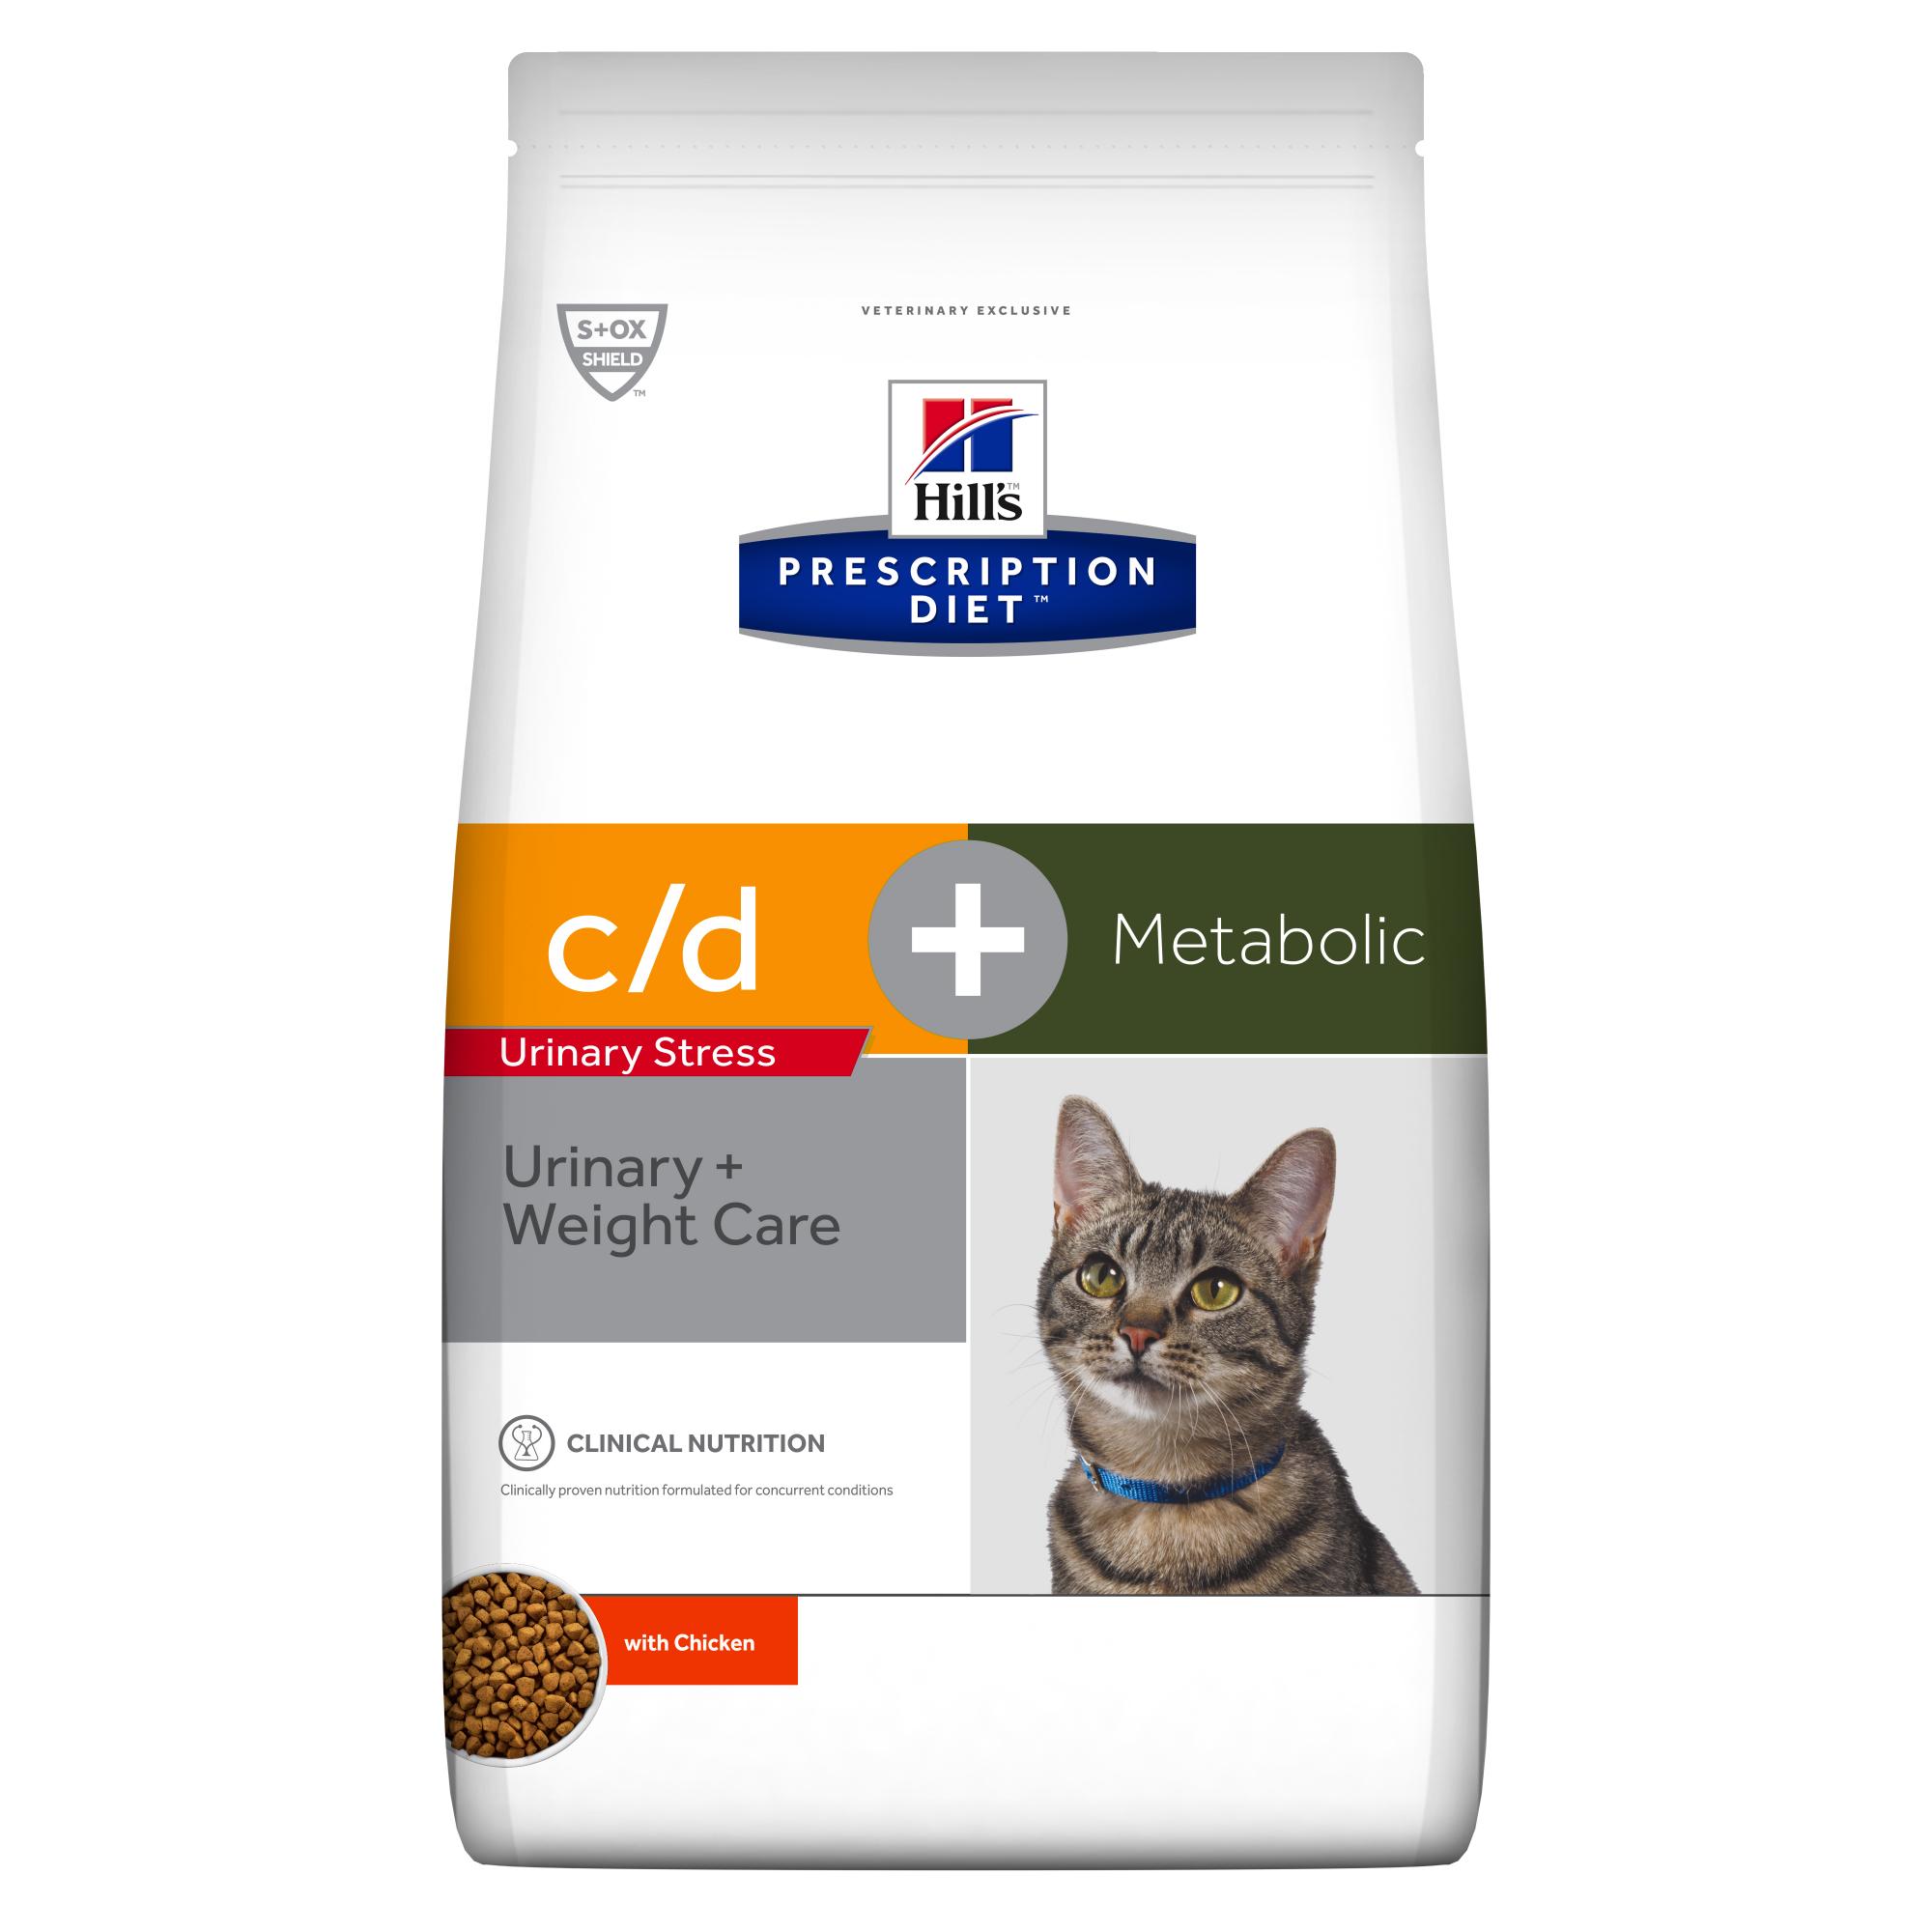 Hill's Prescription Diet Metabolic + Urinary Stress, Cat Food VioVet